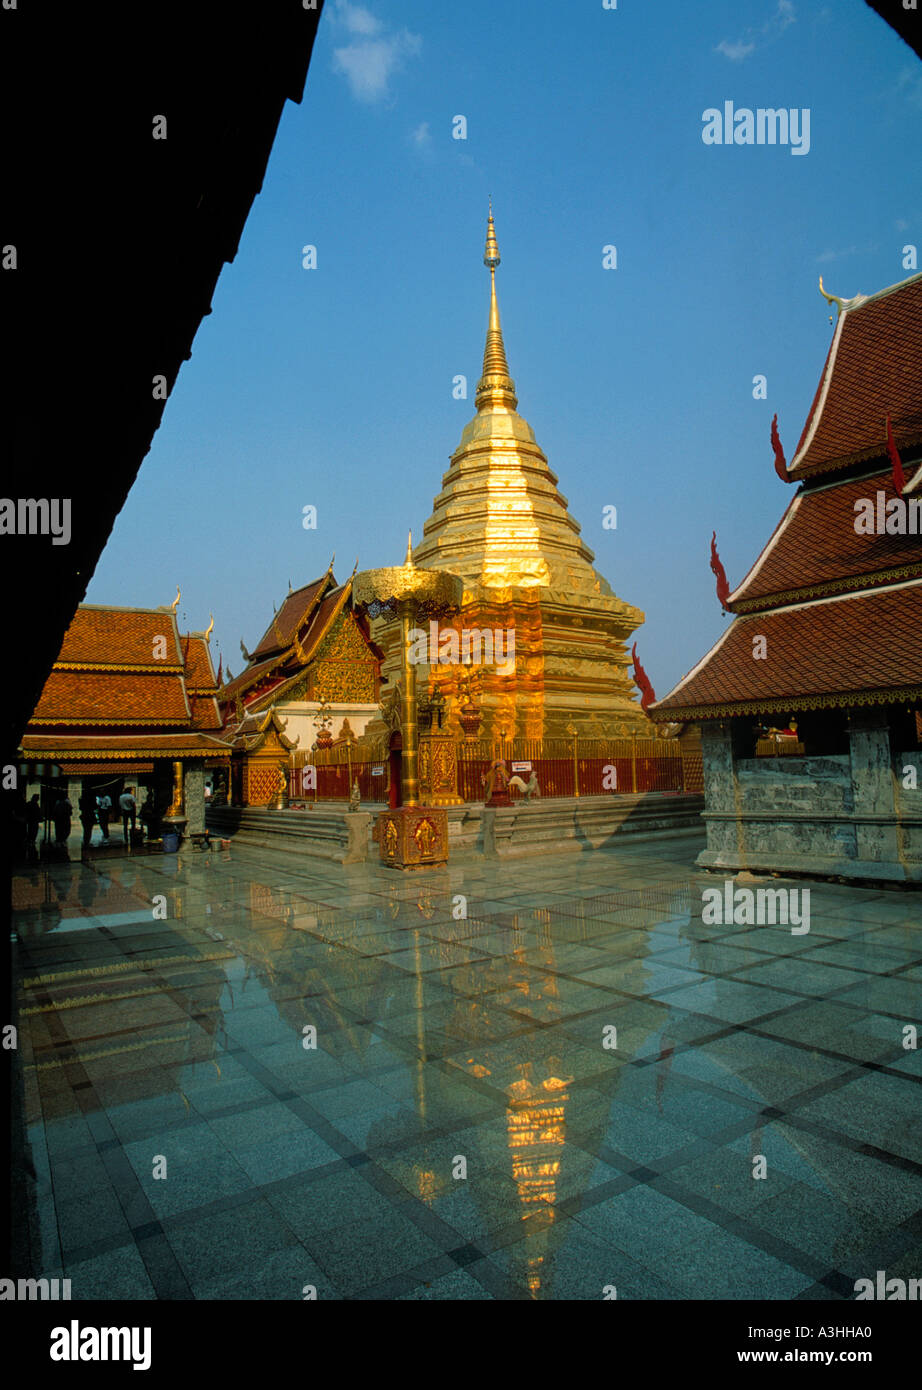 shrine at temple city of chiang mai thailand Stock Photo